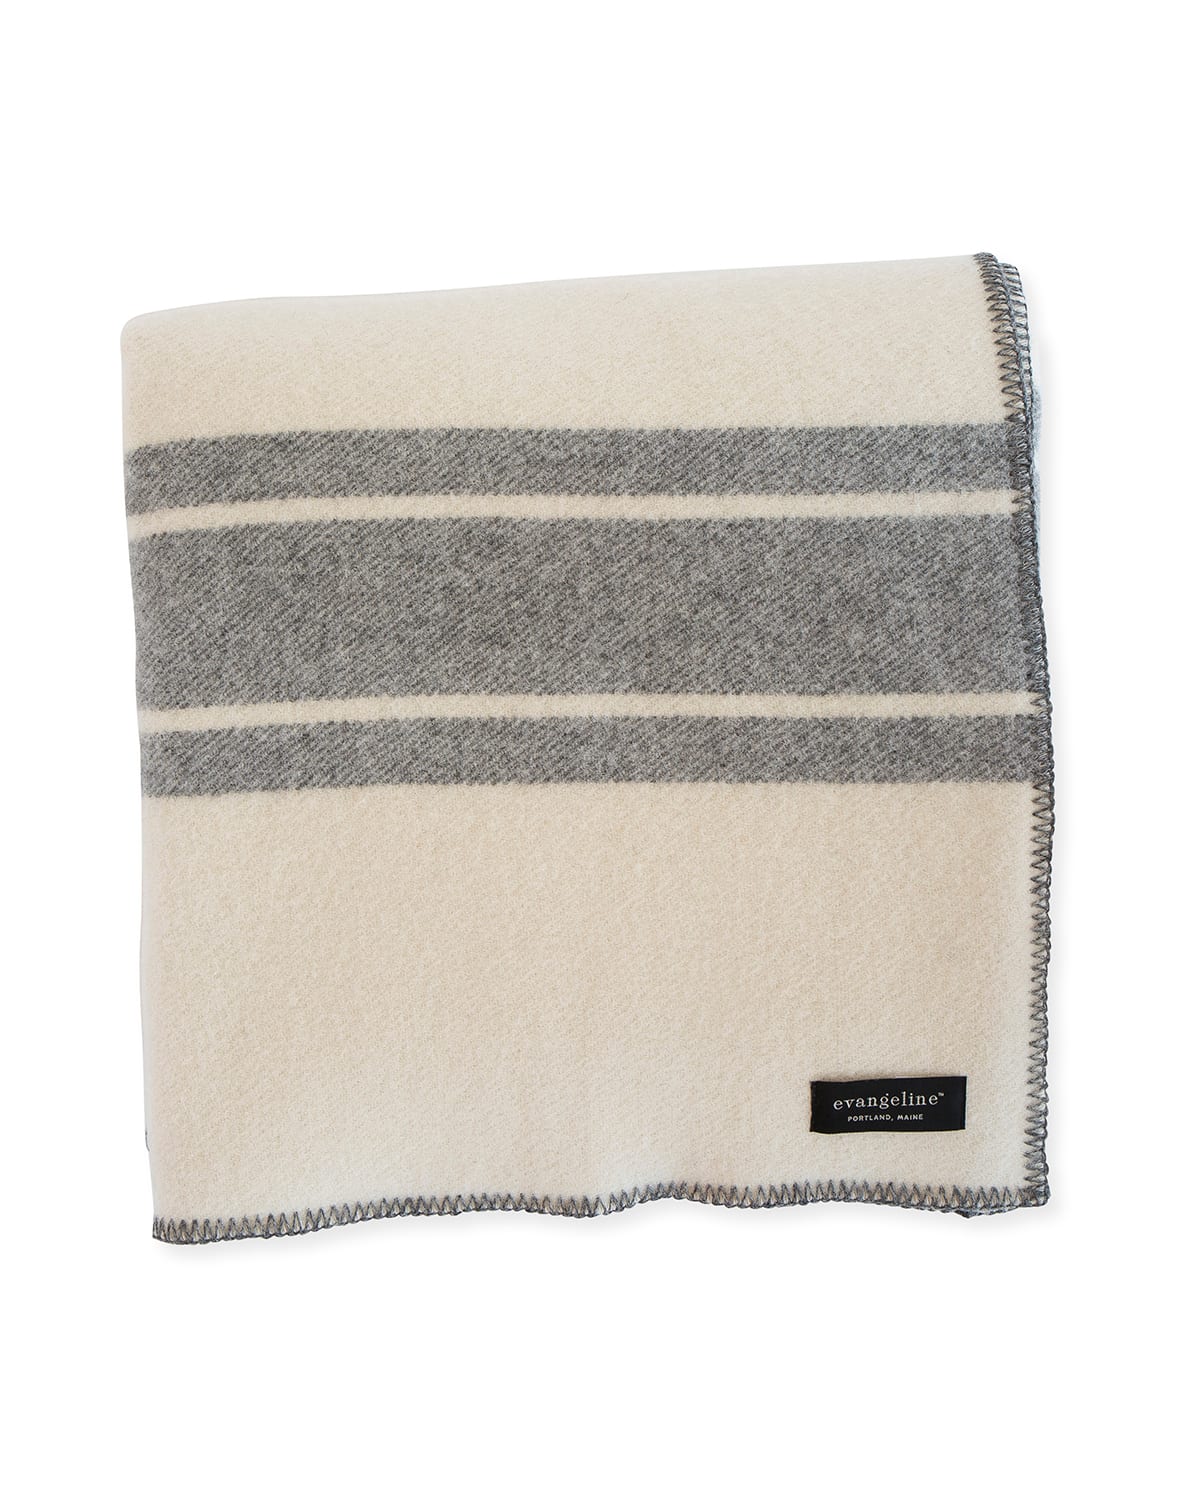 Evangeline Linens A Frame Merino Wool Blanket, Classic Gray In Neutral